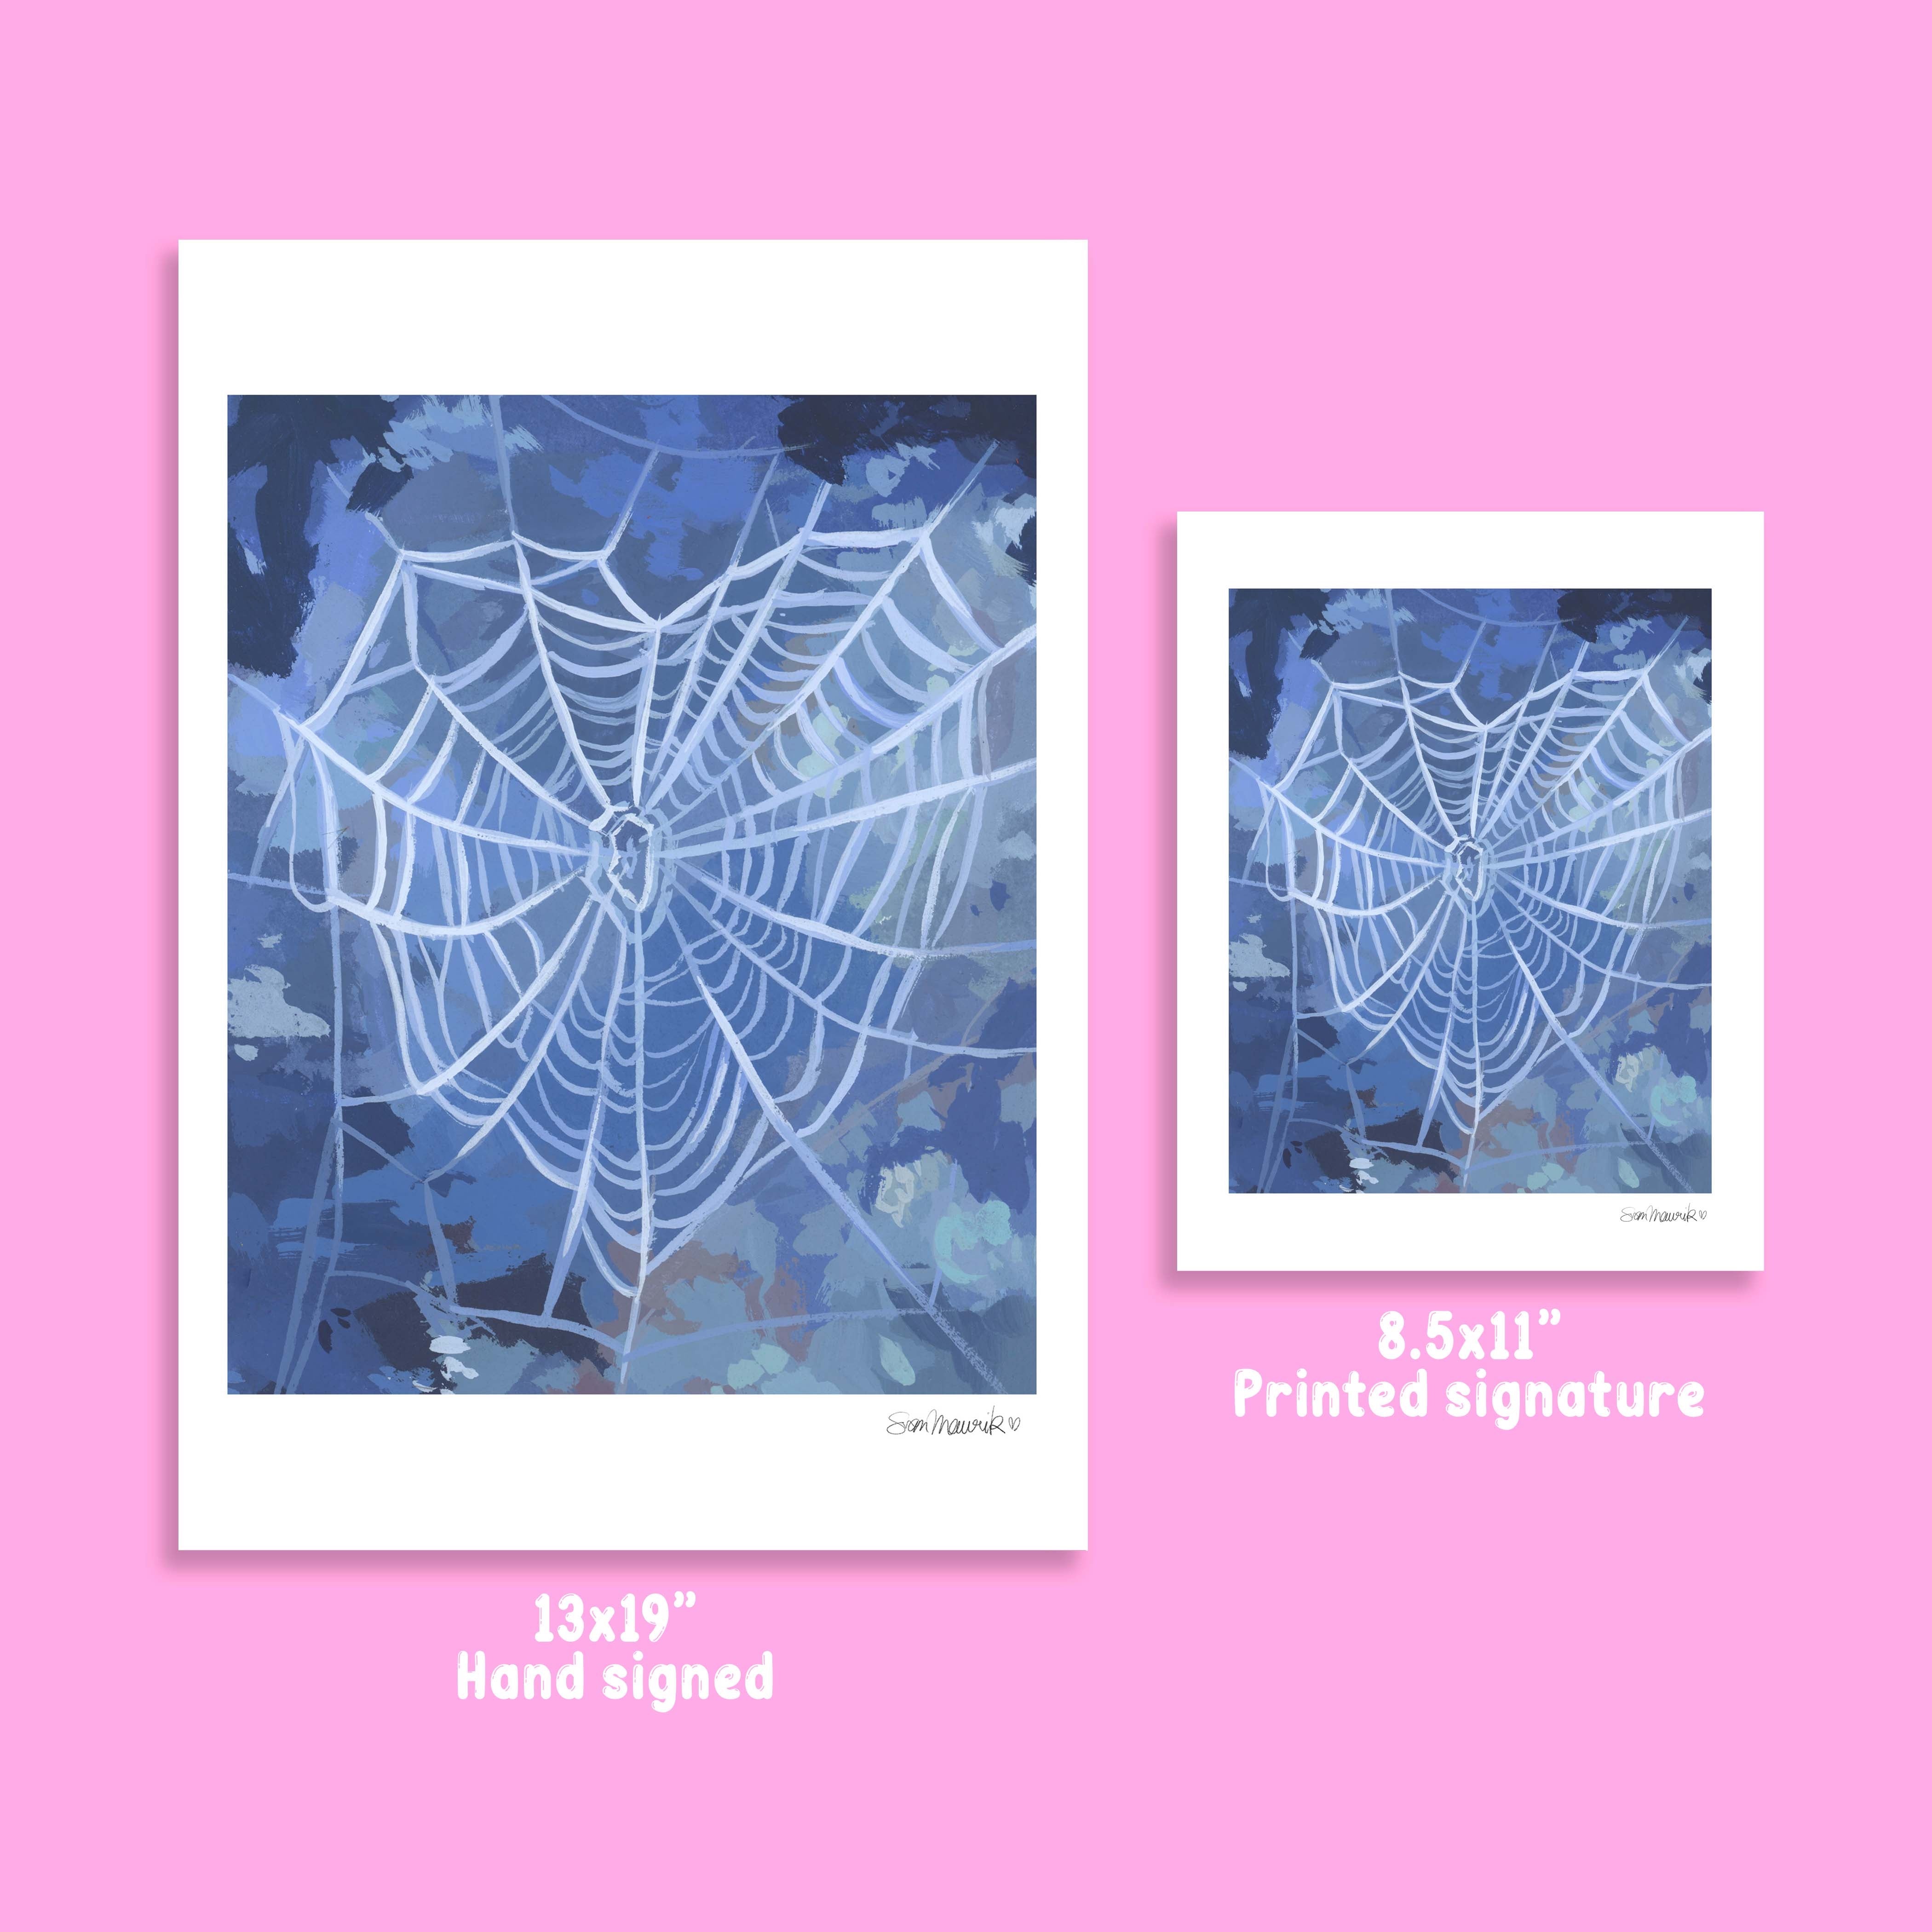 Heart Web Art Print